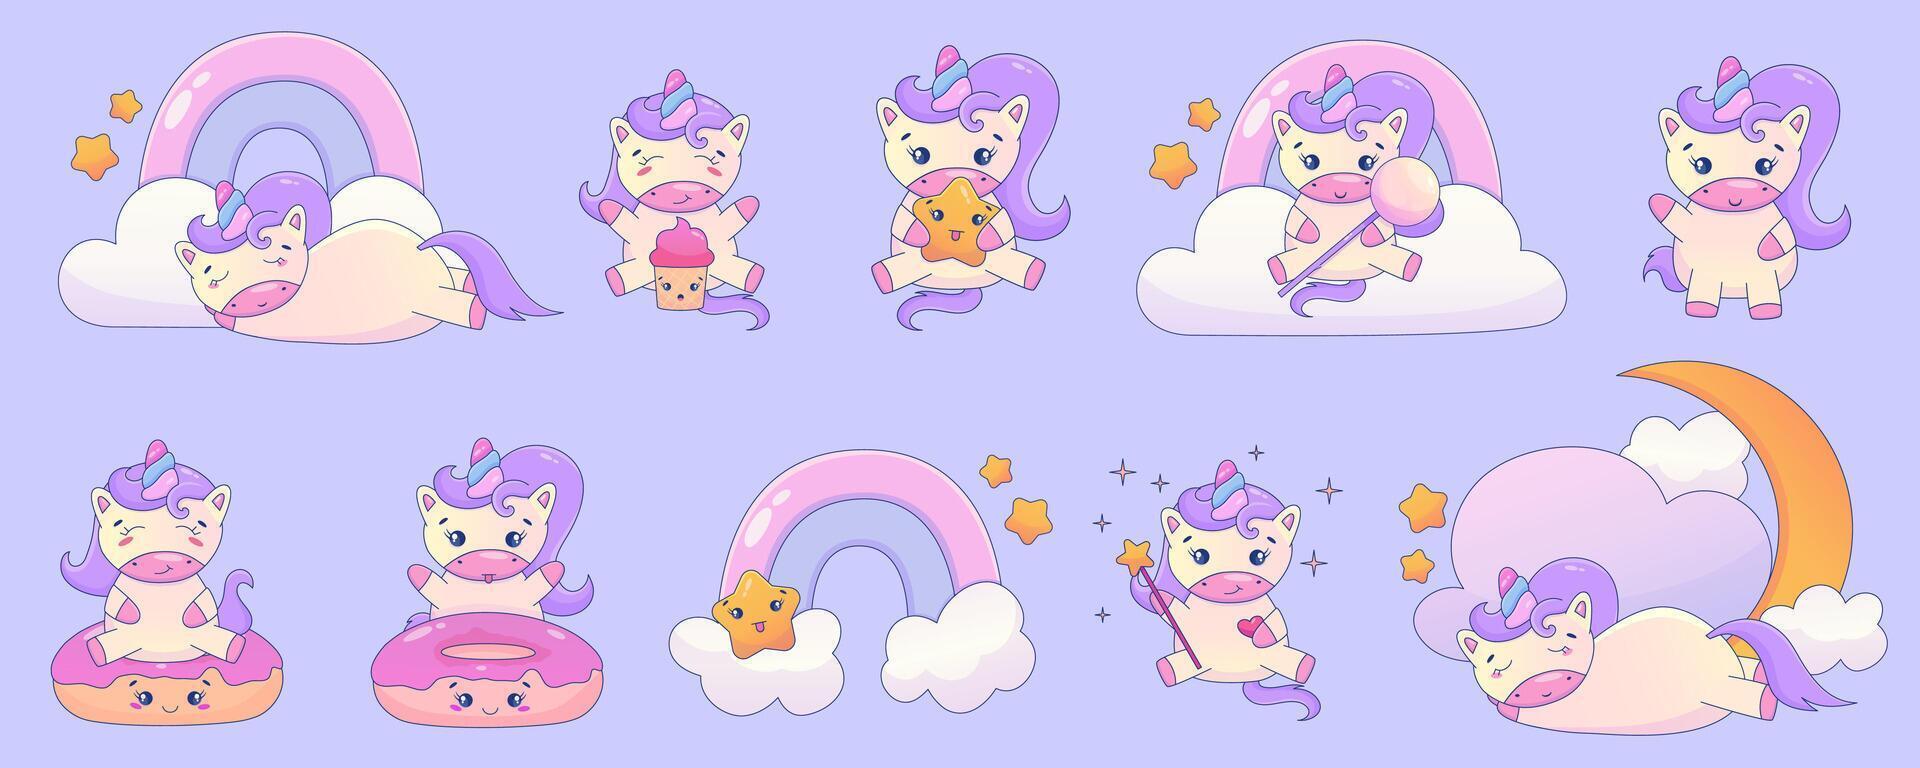 linda dibujos animados unicornio kawaii colocar. unicornio con rosquilla, arco iris kawaii animal pegatina. magia linda poni. dibujos animados vector ilustración